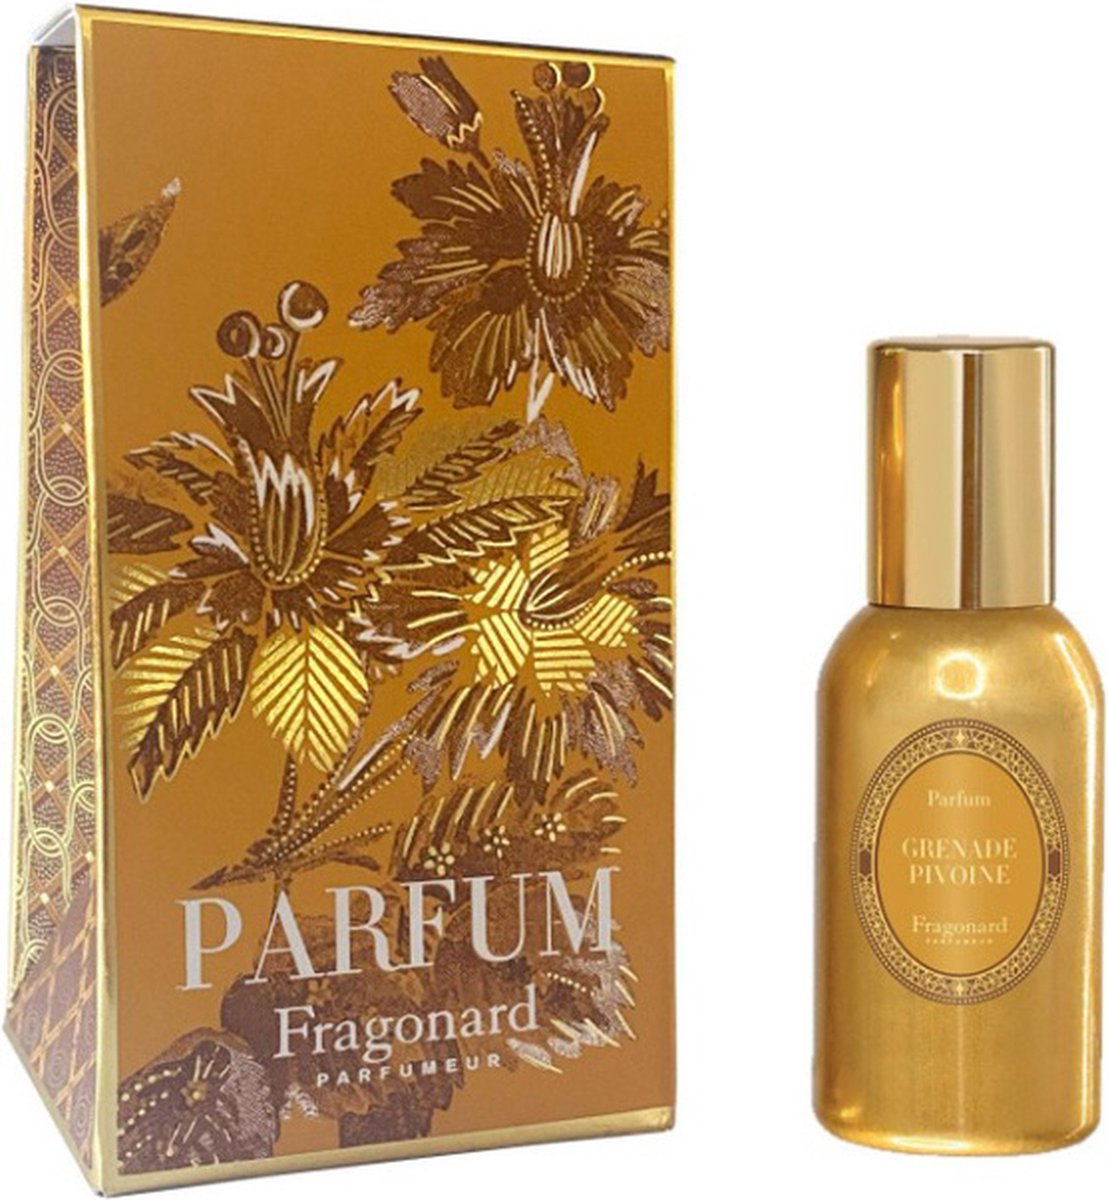 Fragonard Parfum Fragrance Grenade Pivoine The Perfume